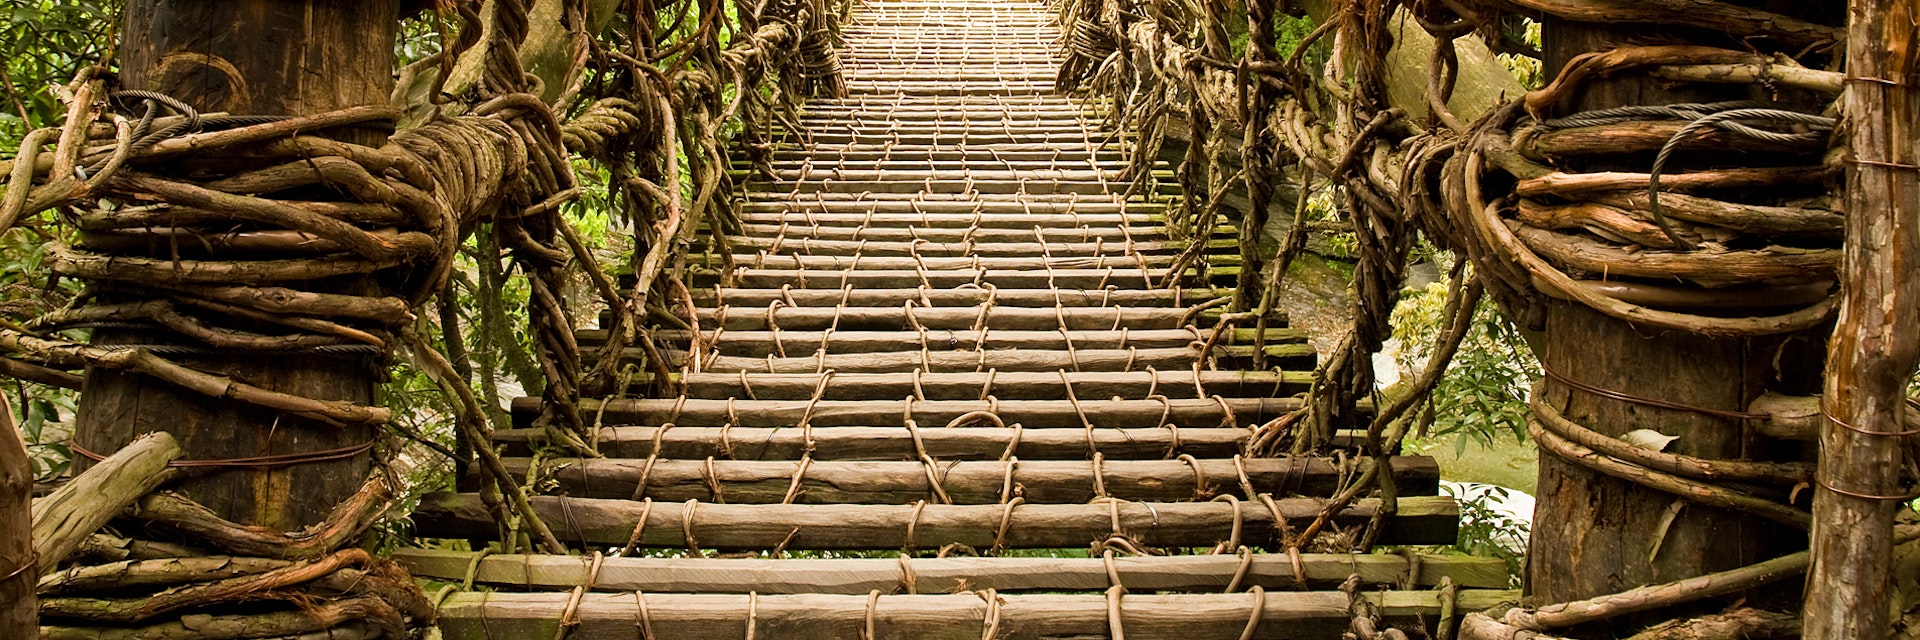 Kazurabashi vine bridge in Japan's Iya Valley